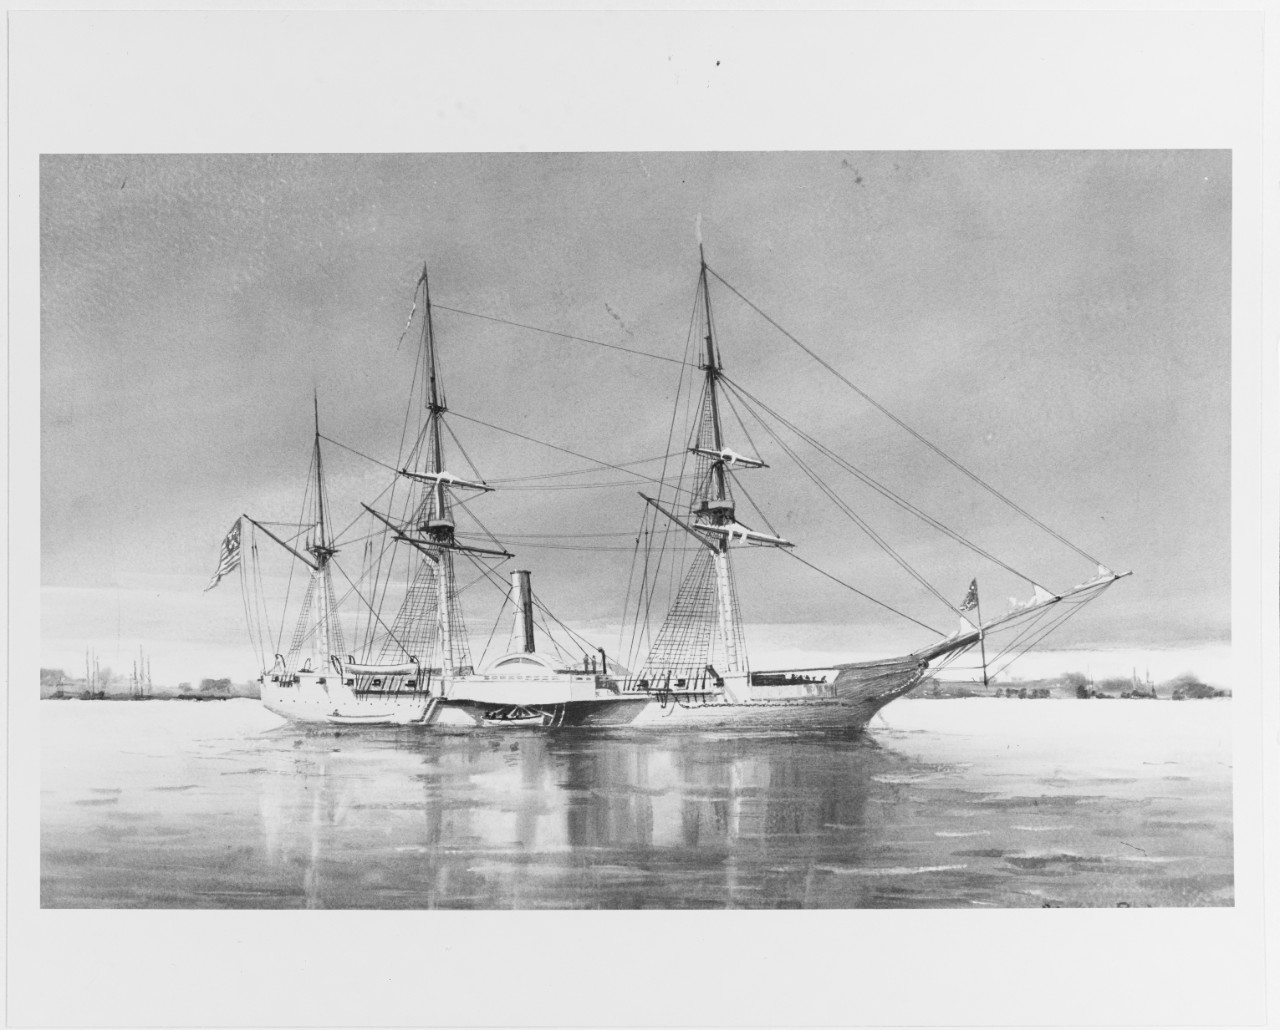 USS MISSISSIPPI (1839-1863)